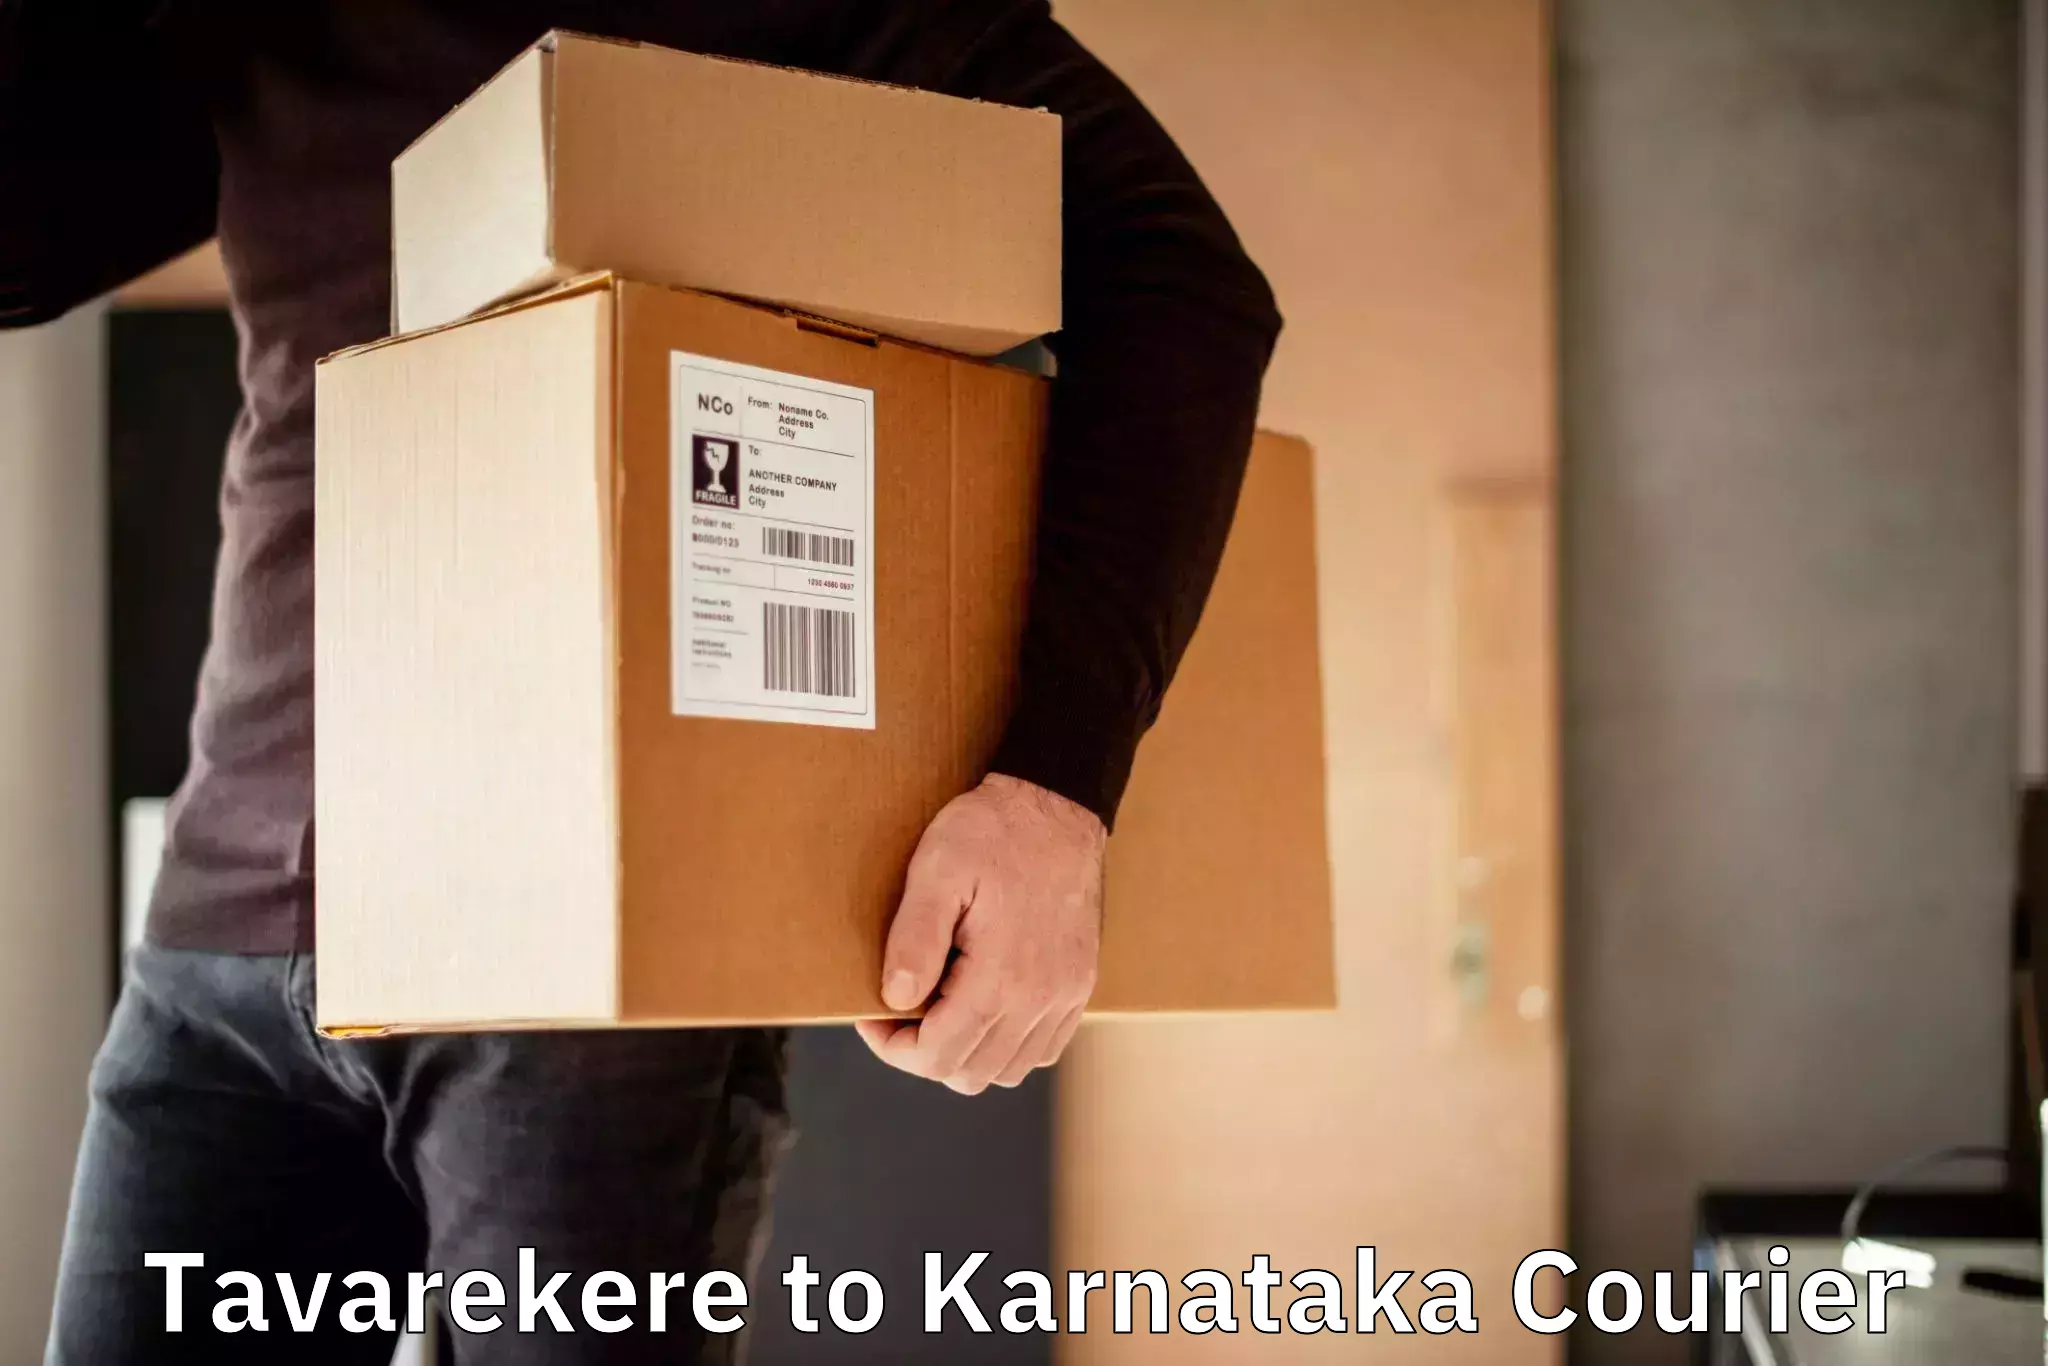 Express logistics service Tavarekere to Karnataka